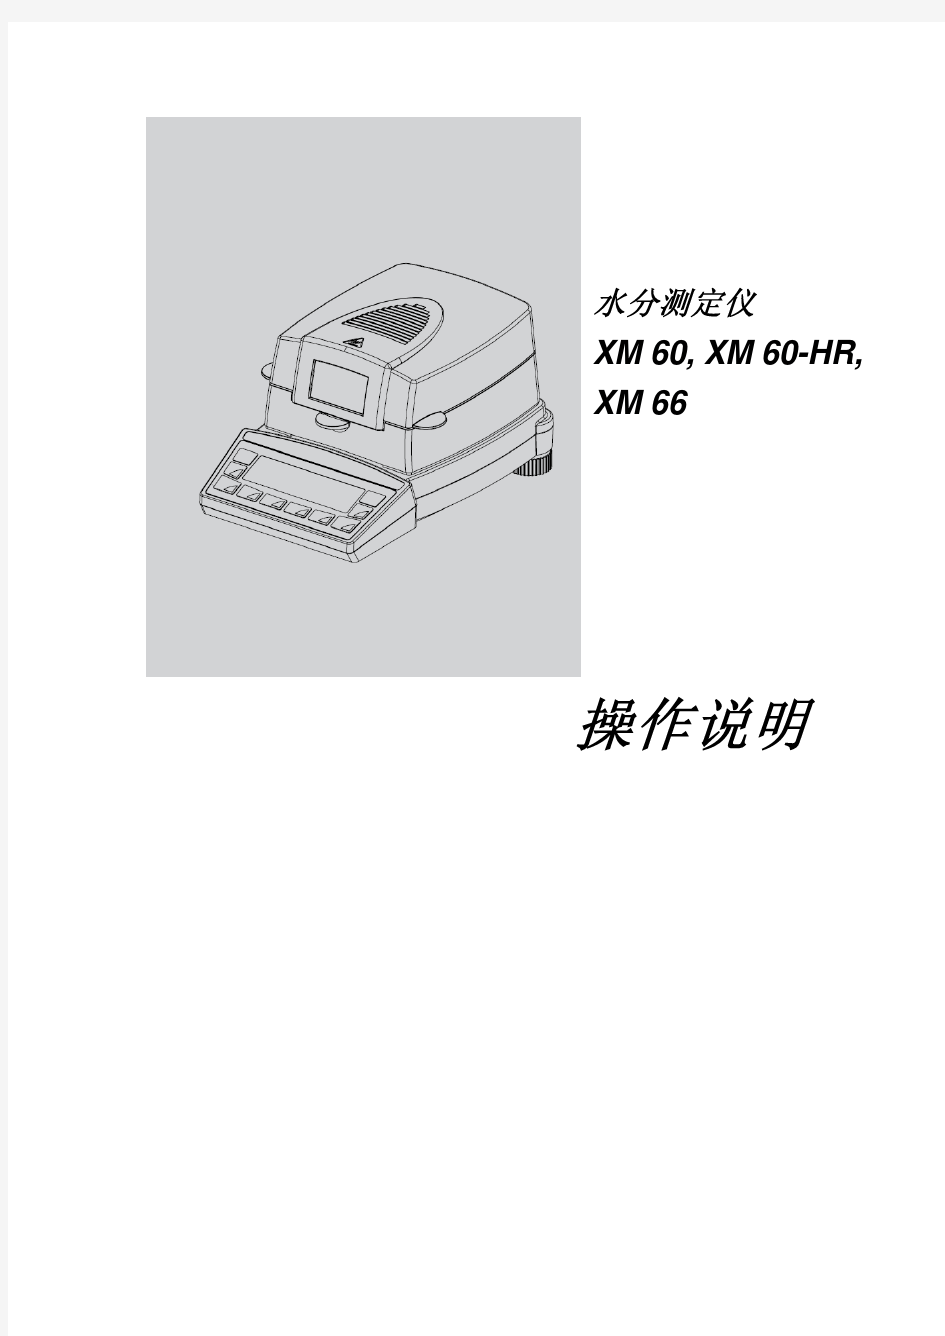 330 XM系列60中文说明书